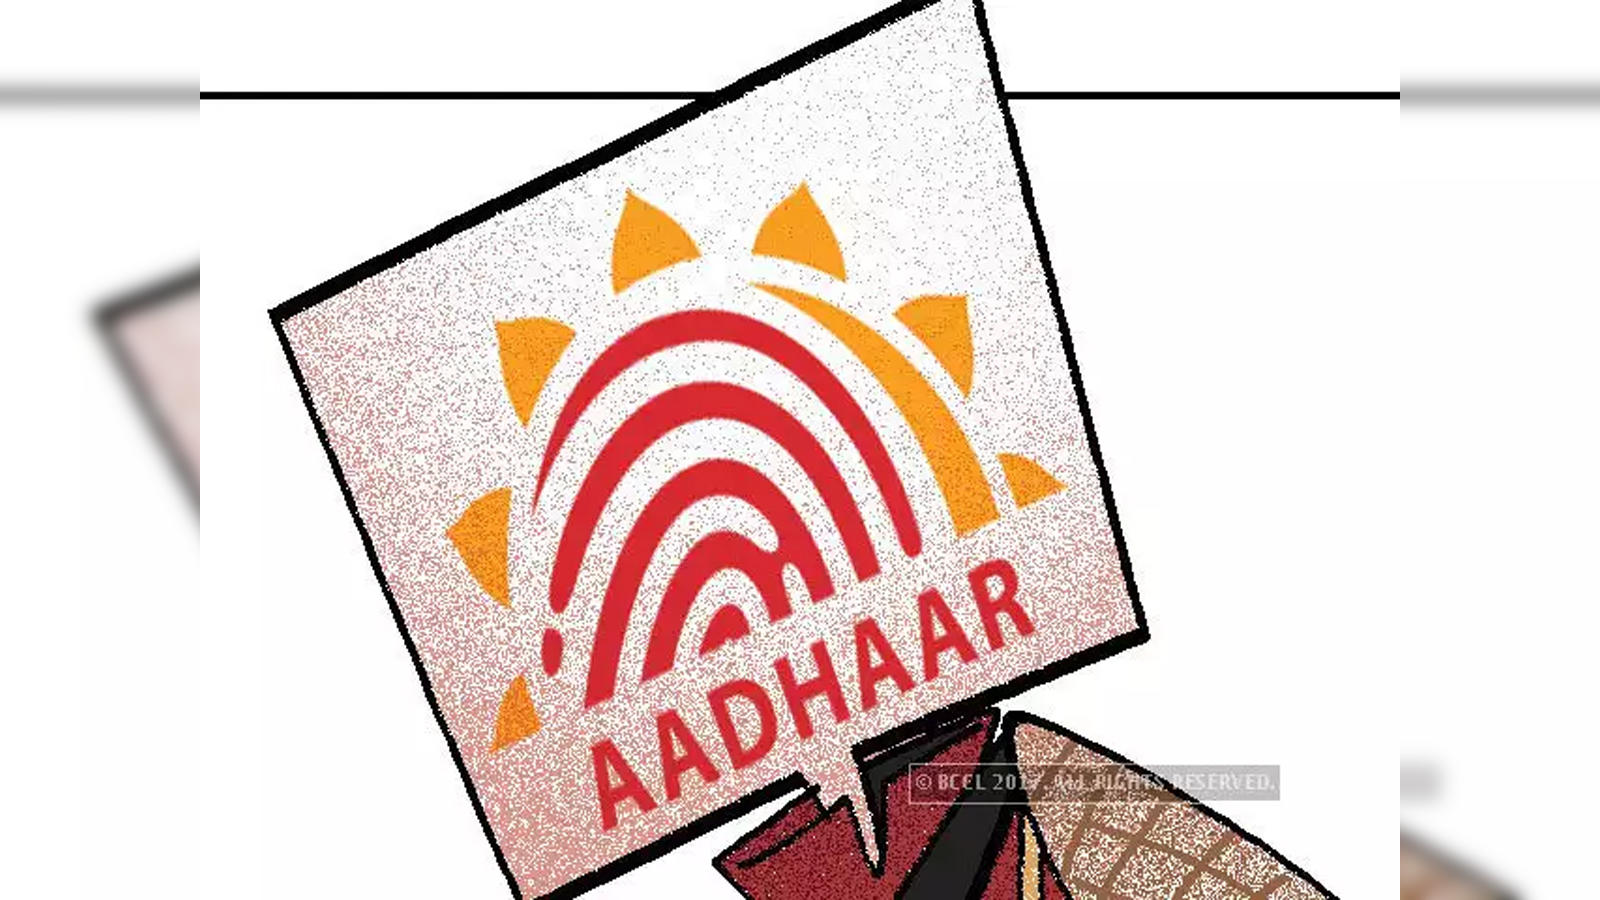 UIDAI: Aadhaar completely secure from malware: UIDAI - The Economic Times